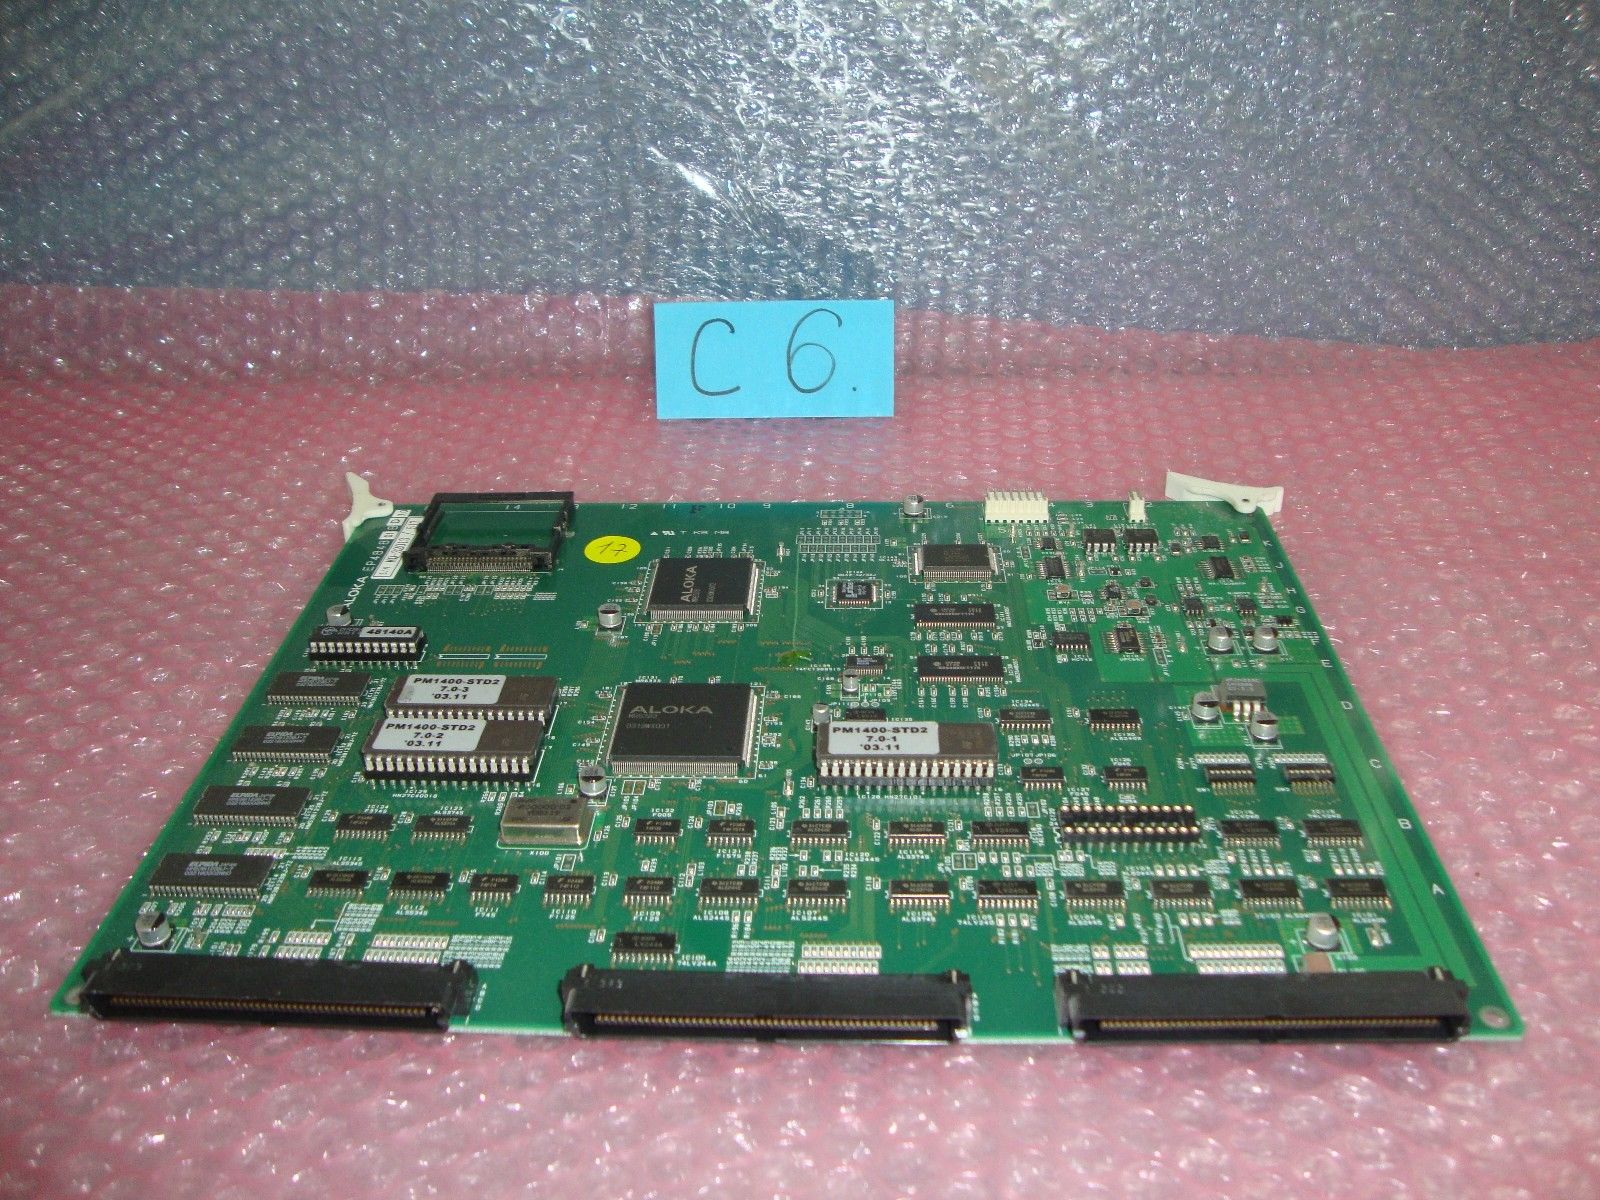 ALOKA SSD-1400 Ultrasound board  ep484801bd DIAGNOSTIC ULTRASOUND MACHINES FOR SALE